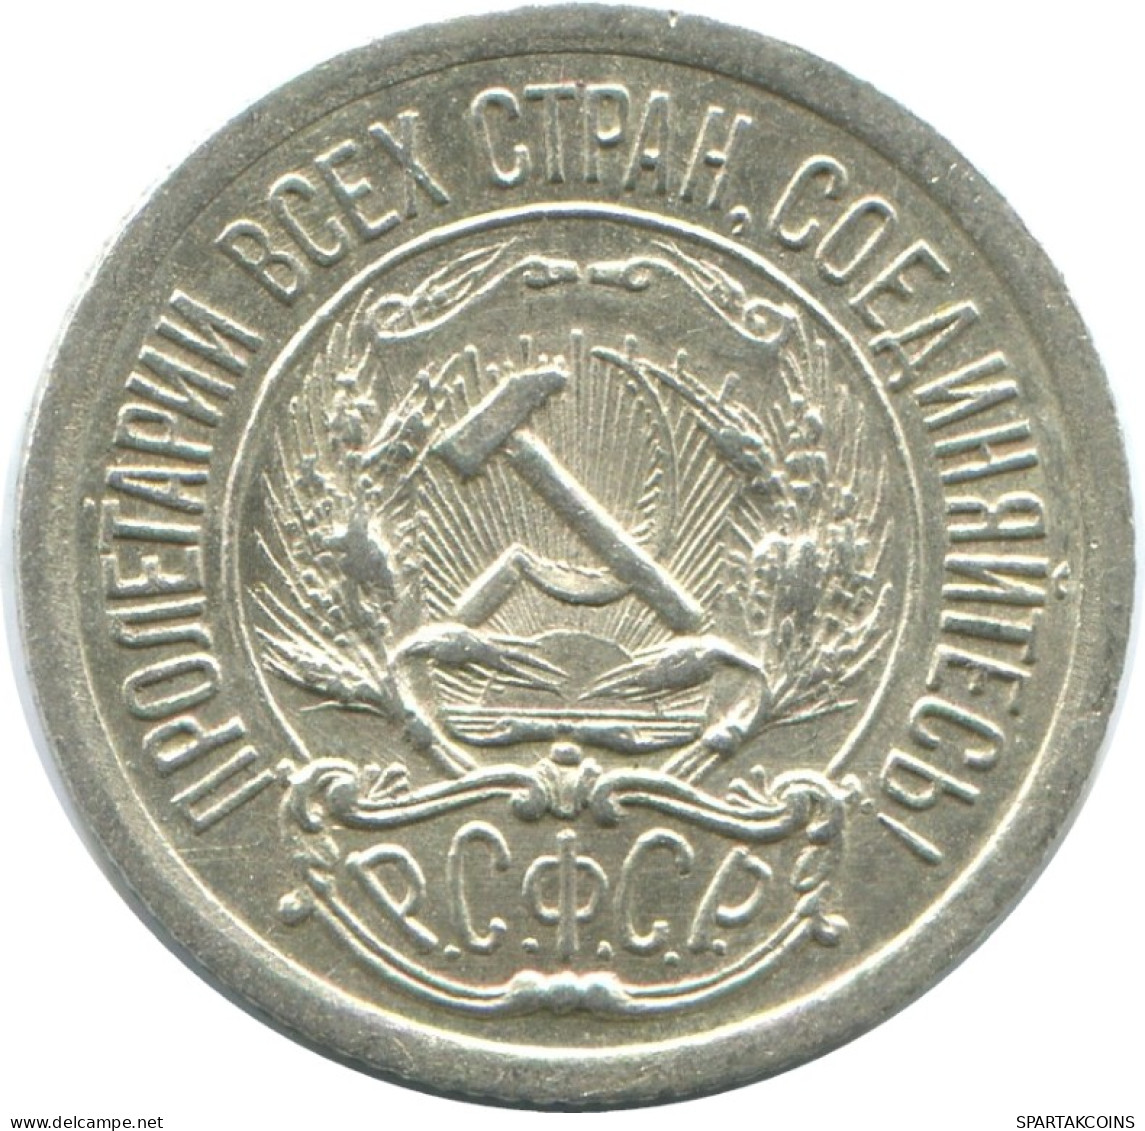 10 KOPEKS 1923 RUSIA RUSSIA RSFSR PLATA Moneda HIGH GRADE #AE983.4.E.A - Russia